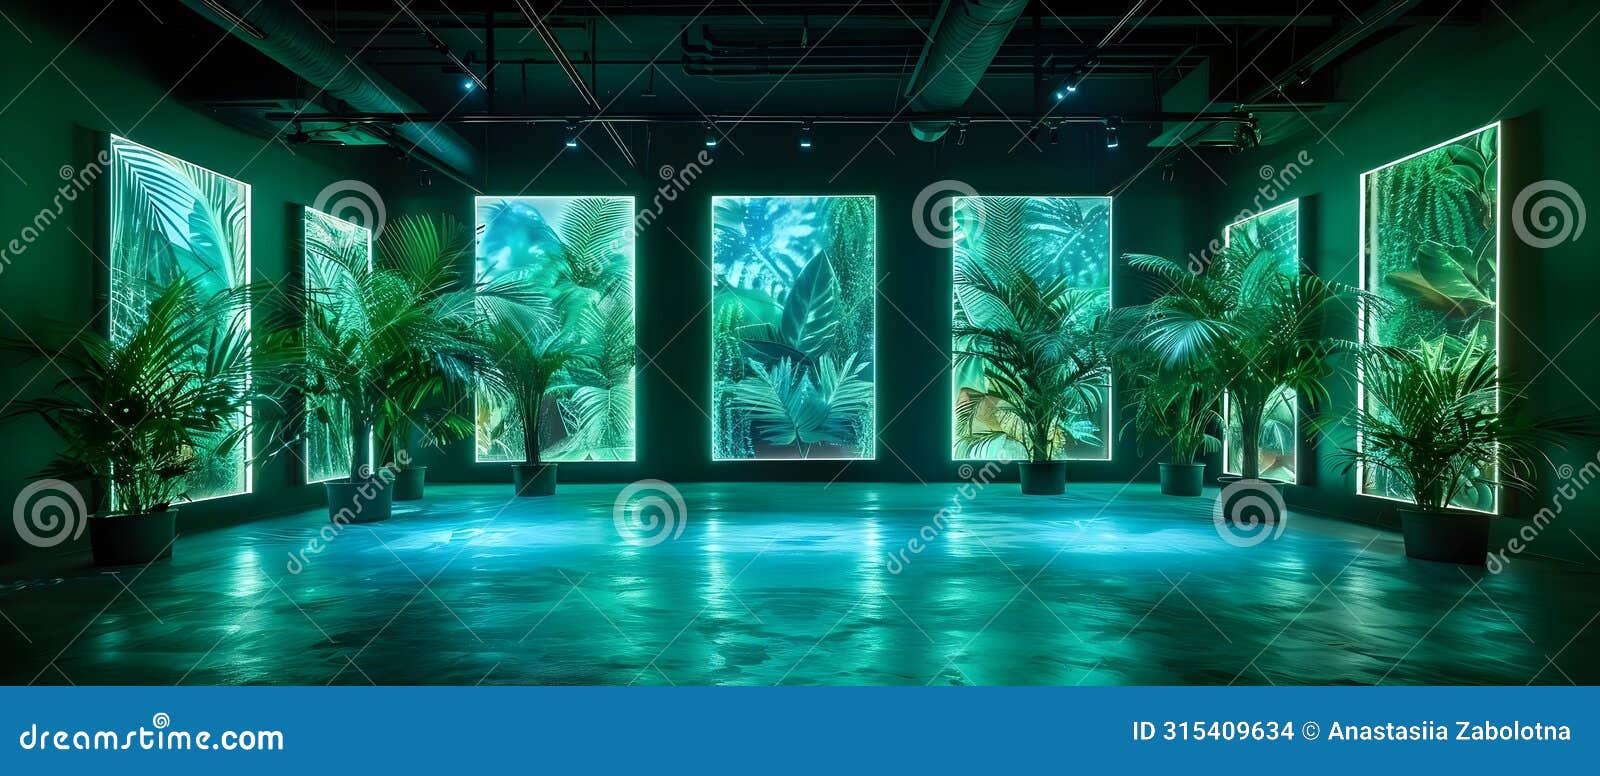 neon jungle: an immersive digital art experience. concept virtual reality, digital artwork,